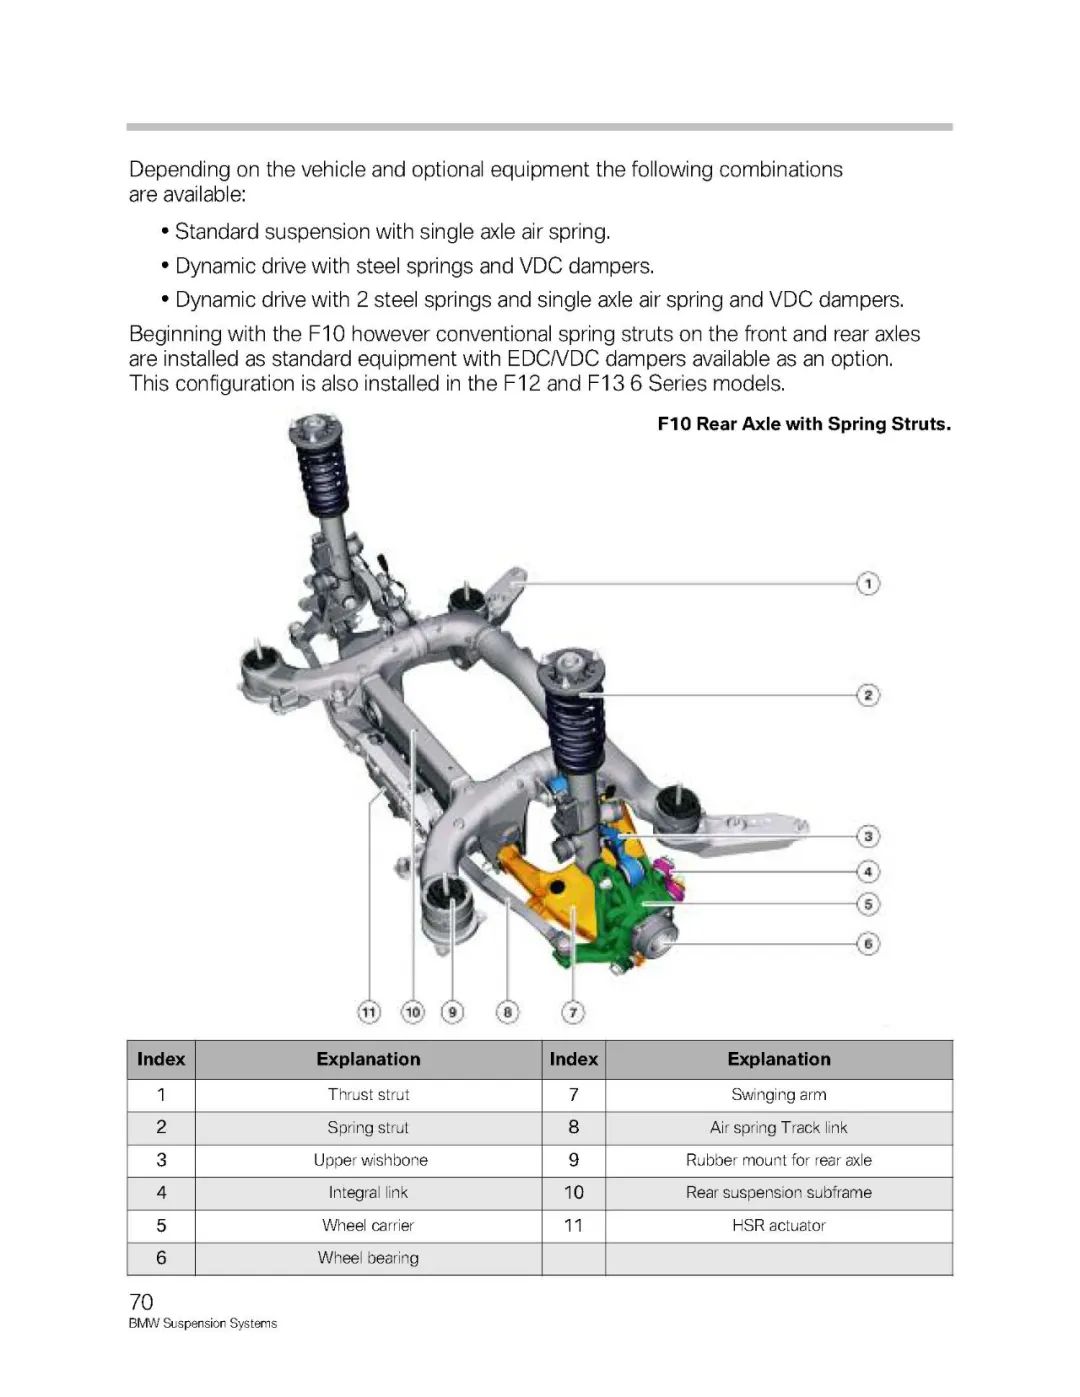 BMW汽车各车型悬架系统介绍w72.jpg